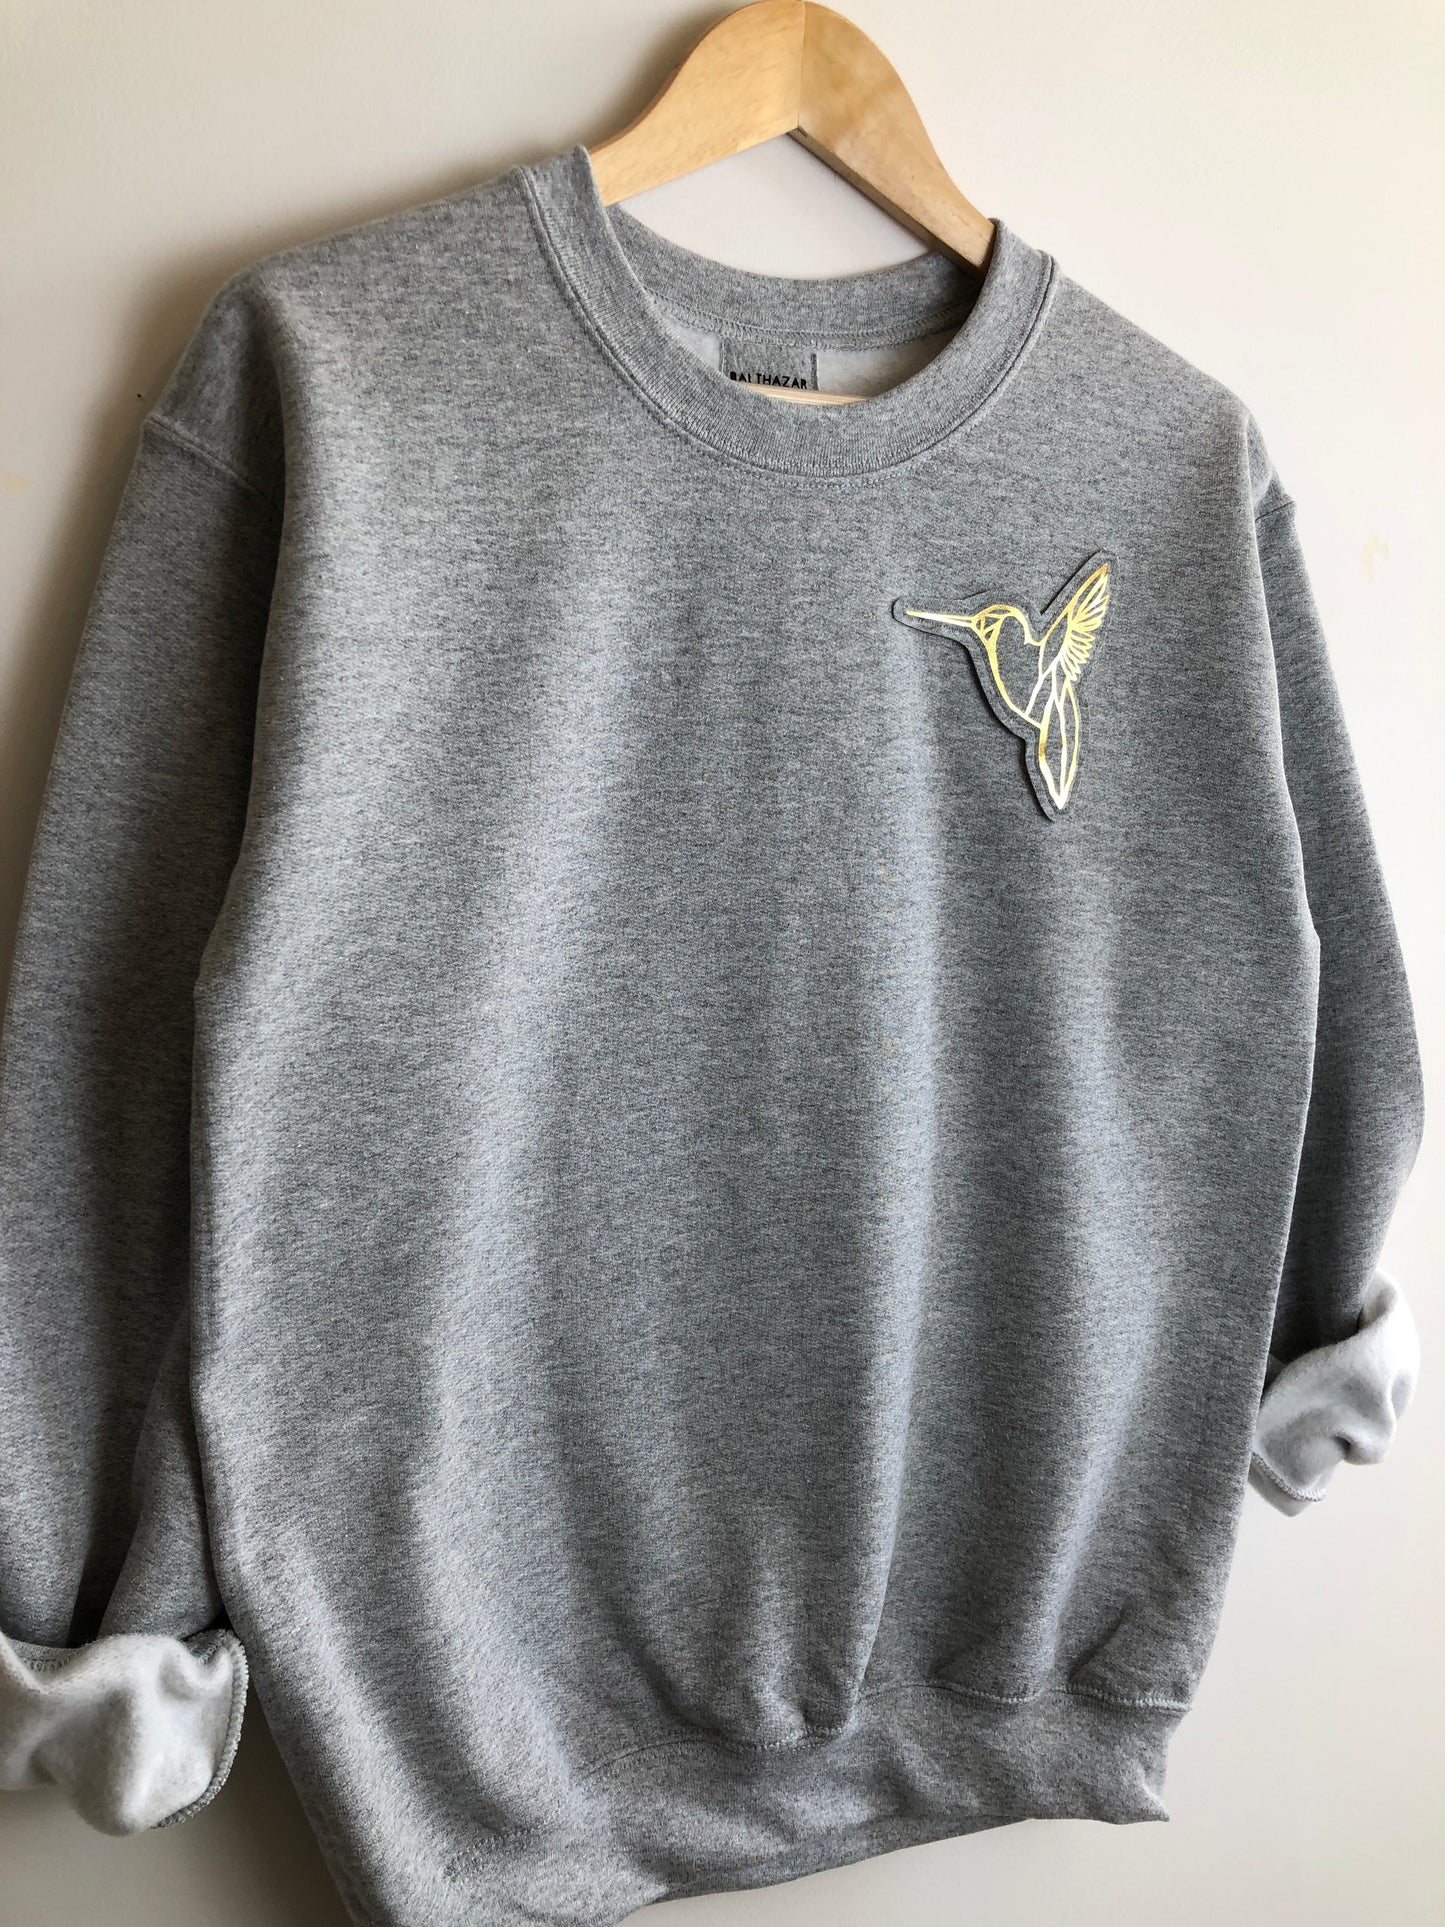 Origami Hummingbird sweatshirt - textured metallic